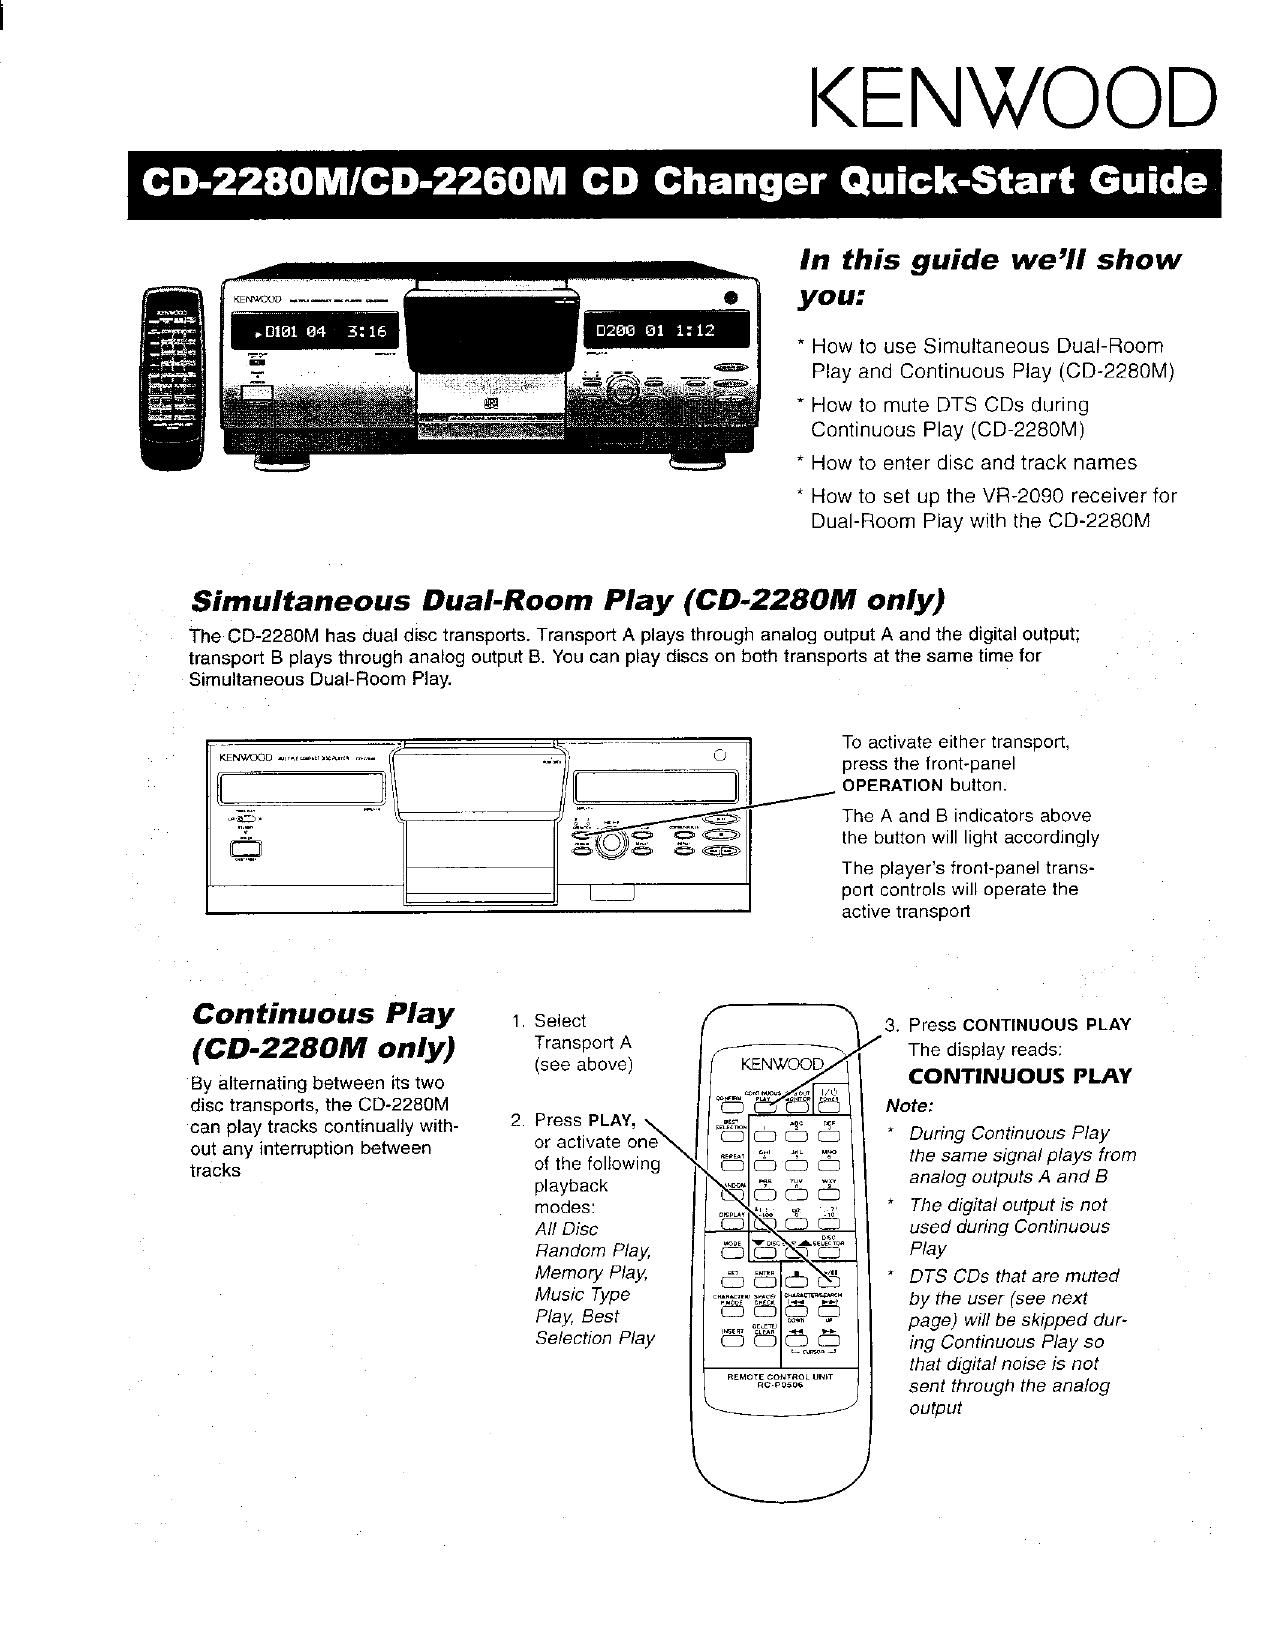 Kenwood CD 2260 M Owners Manual 2